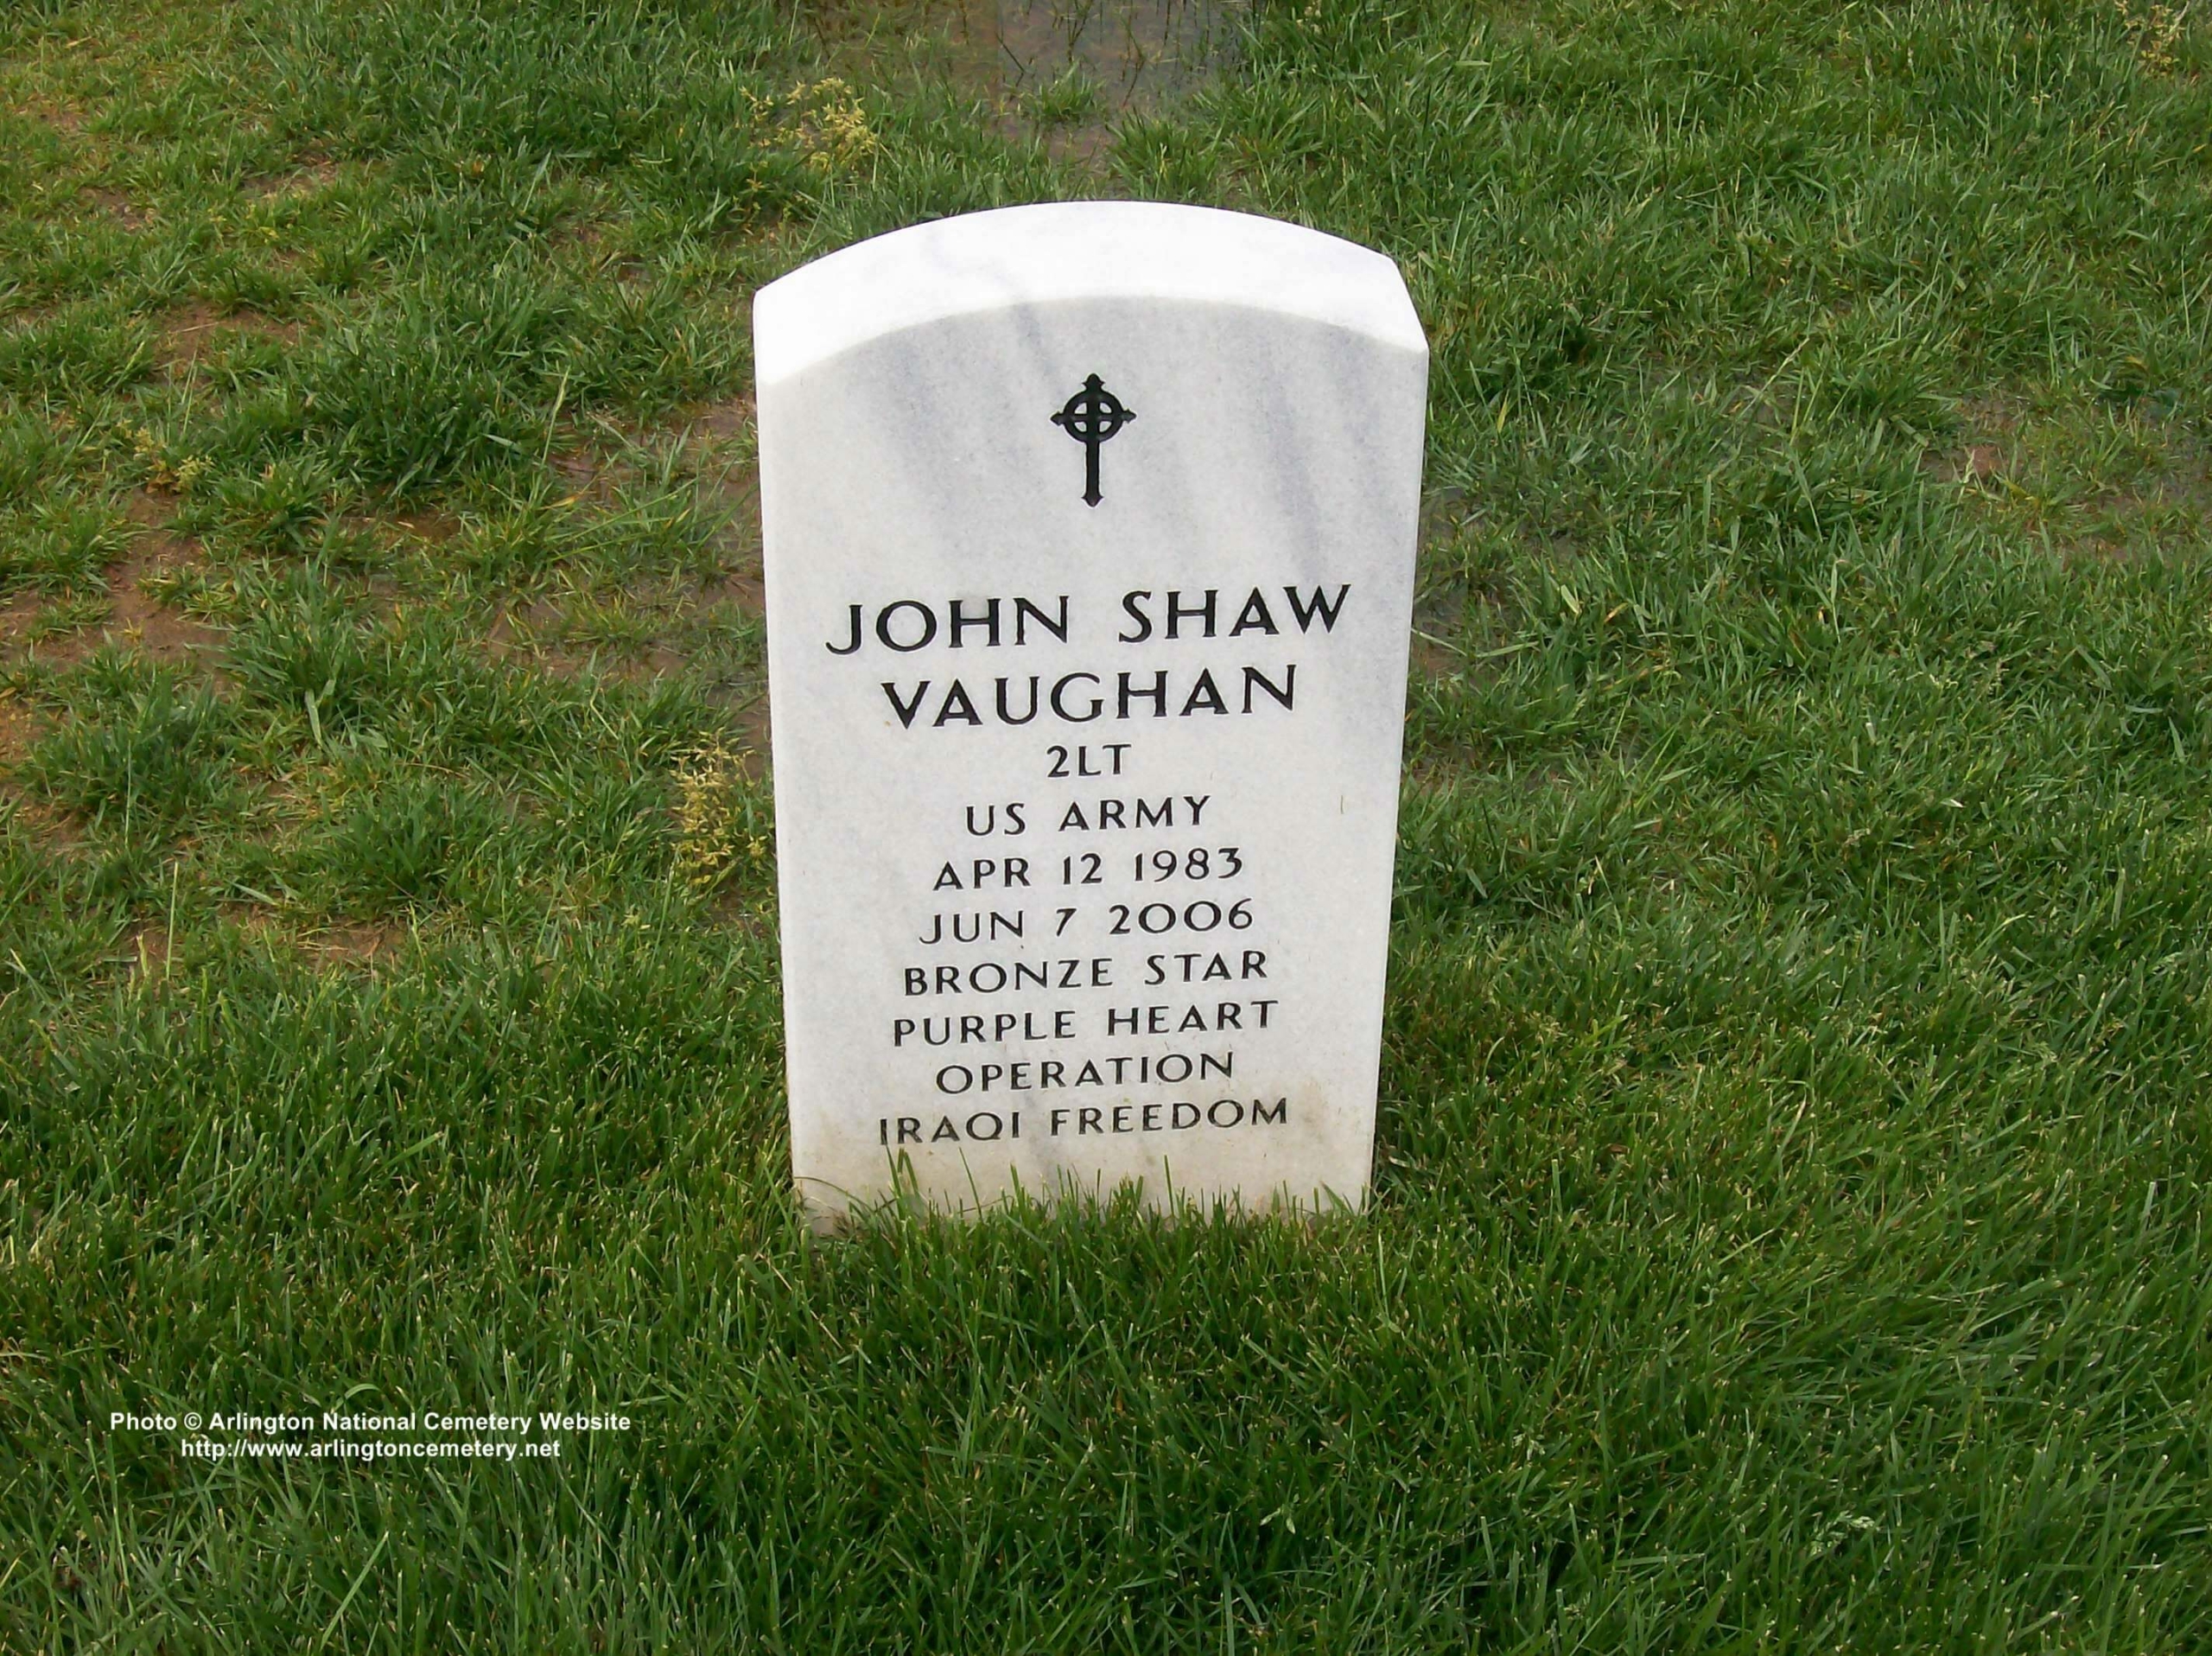 jsvaughan-gravesite-photo-may-2008-001